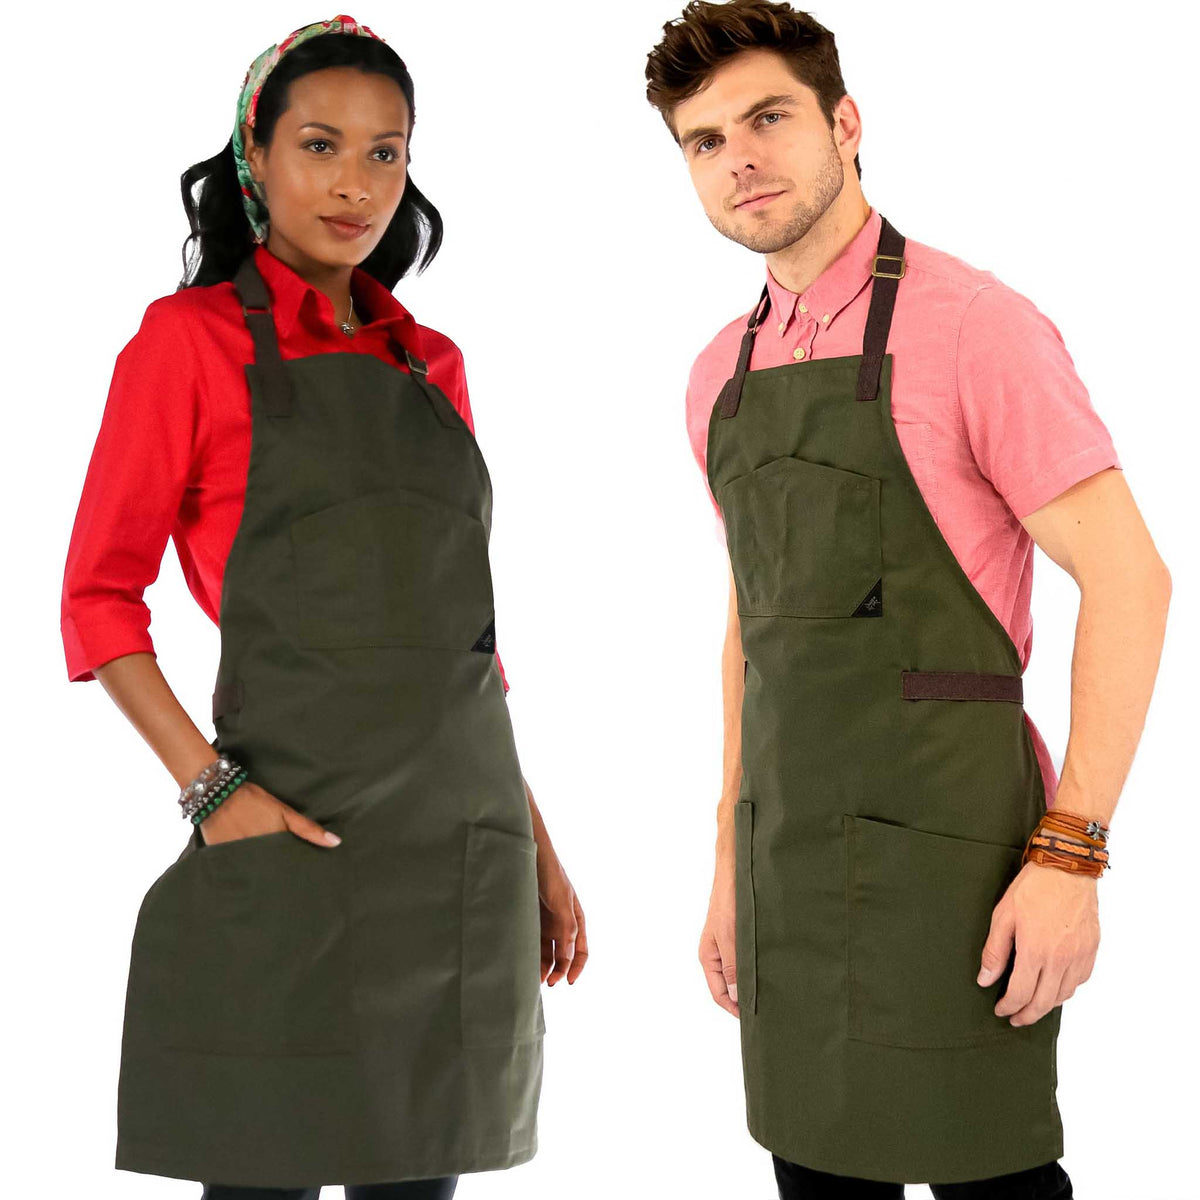 Chef Apron – Denim or Twill - Cotton Straps - Smart Pockets - Pro Chef, Cook, Barista, Bartender - Under NY Sky